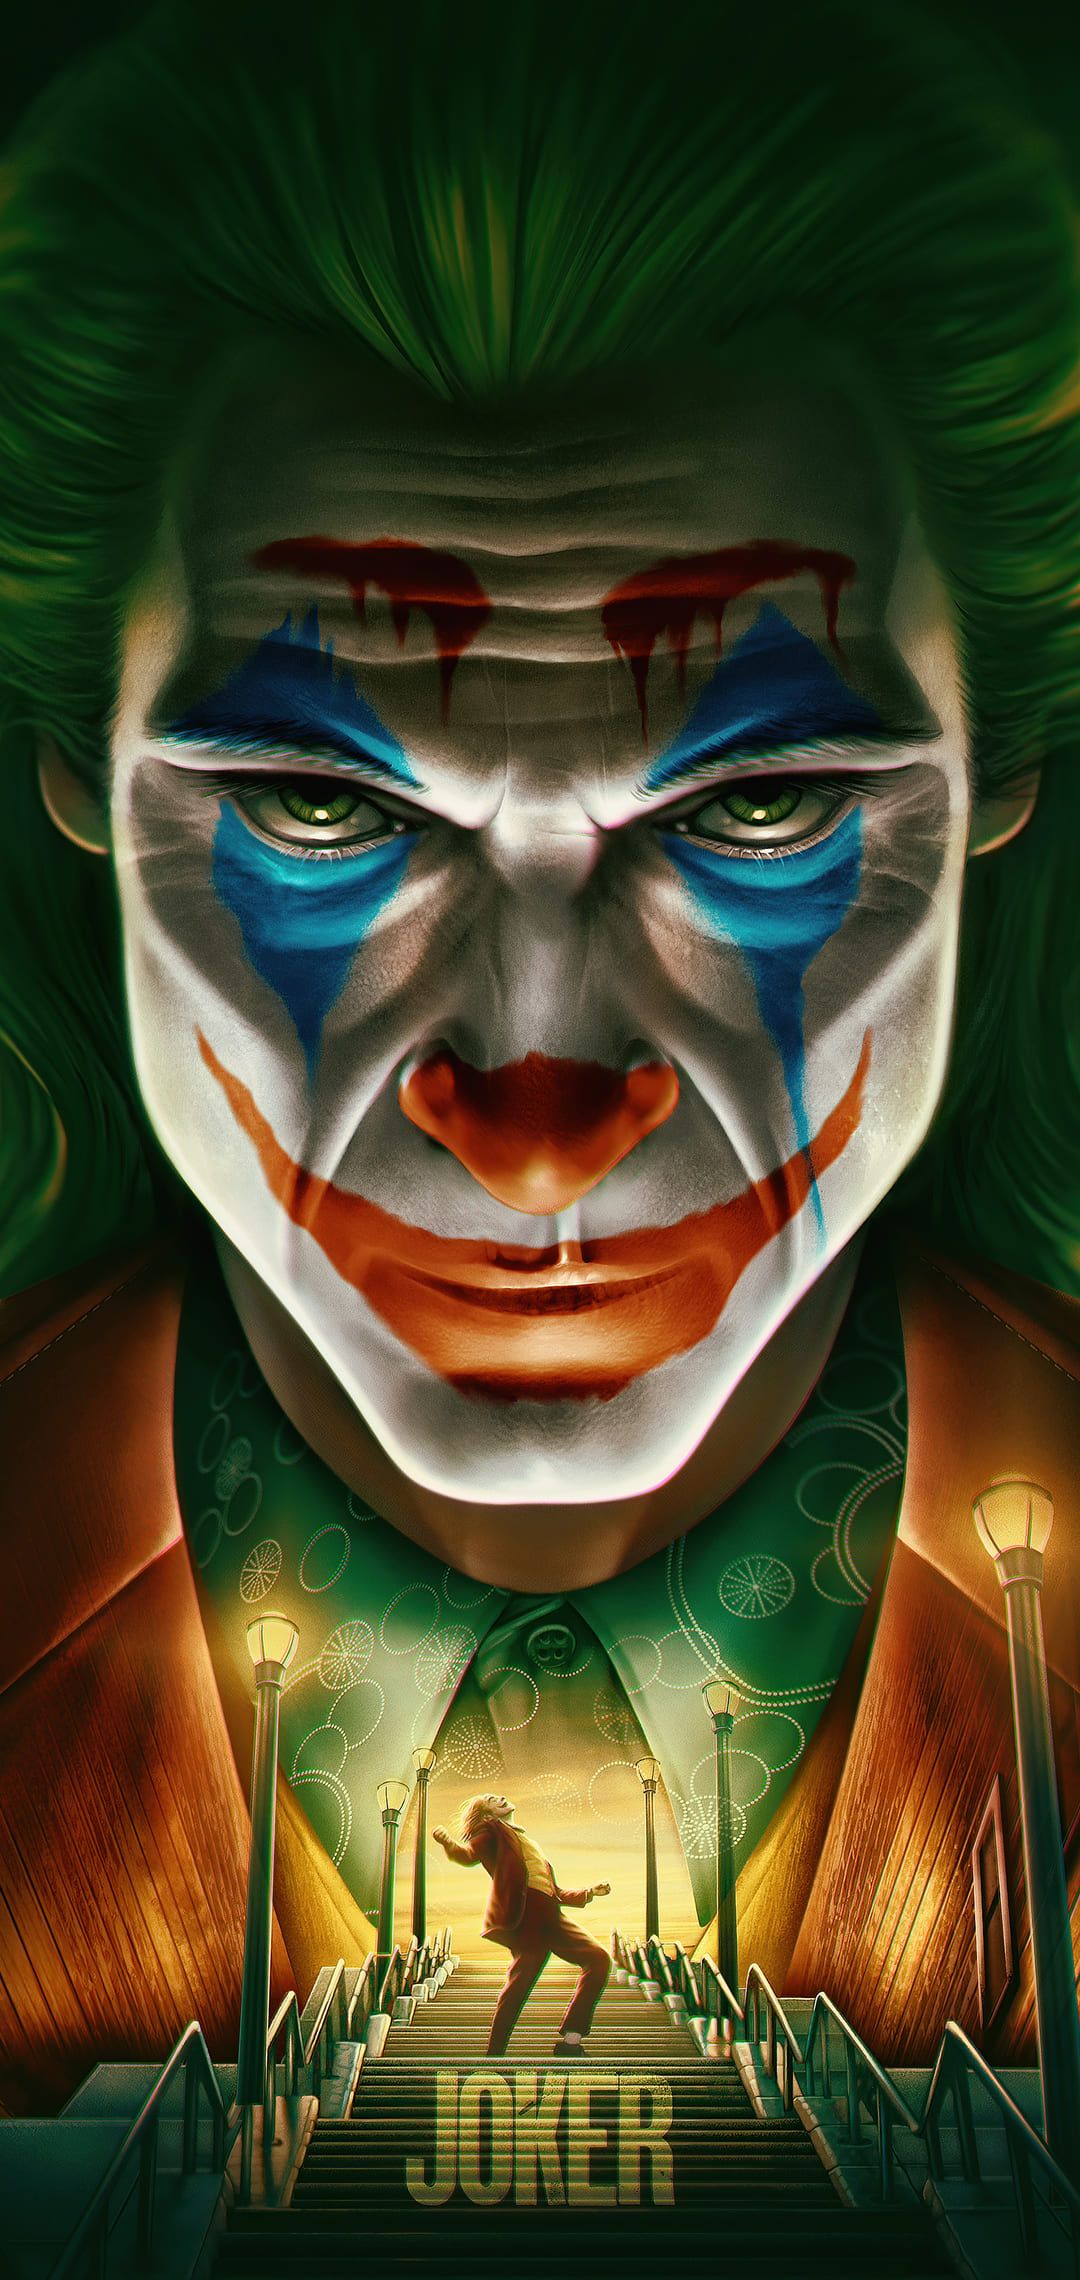 Joker iPhone 11 Pro Max Wallpaper: iPhone Wallpaper